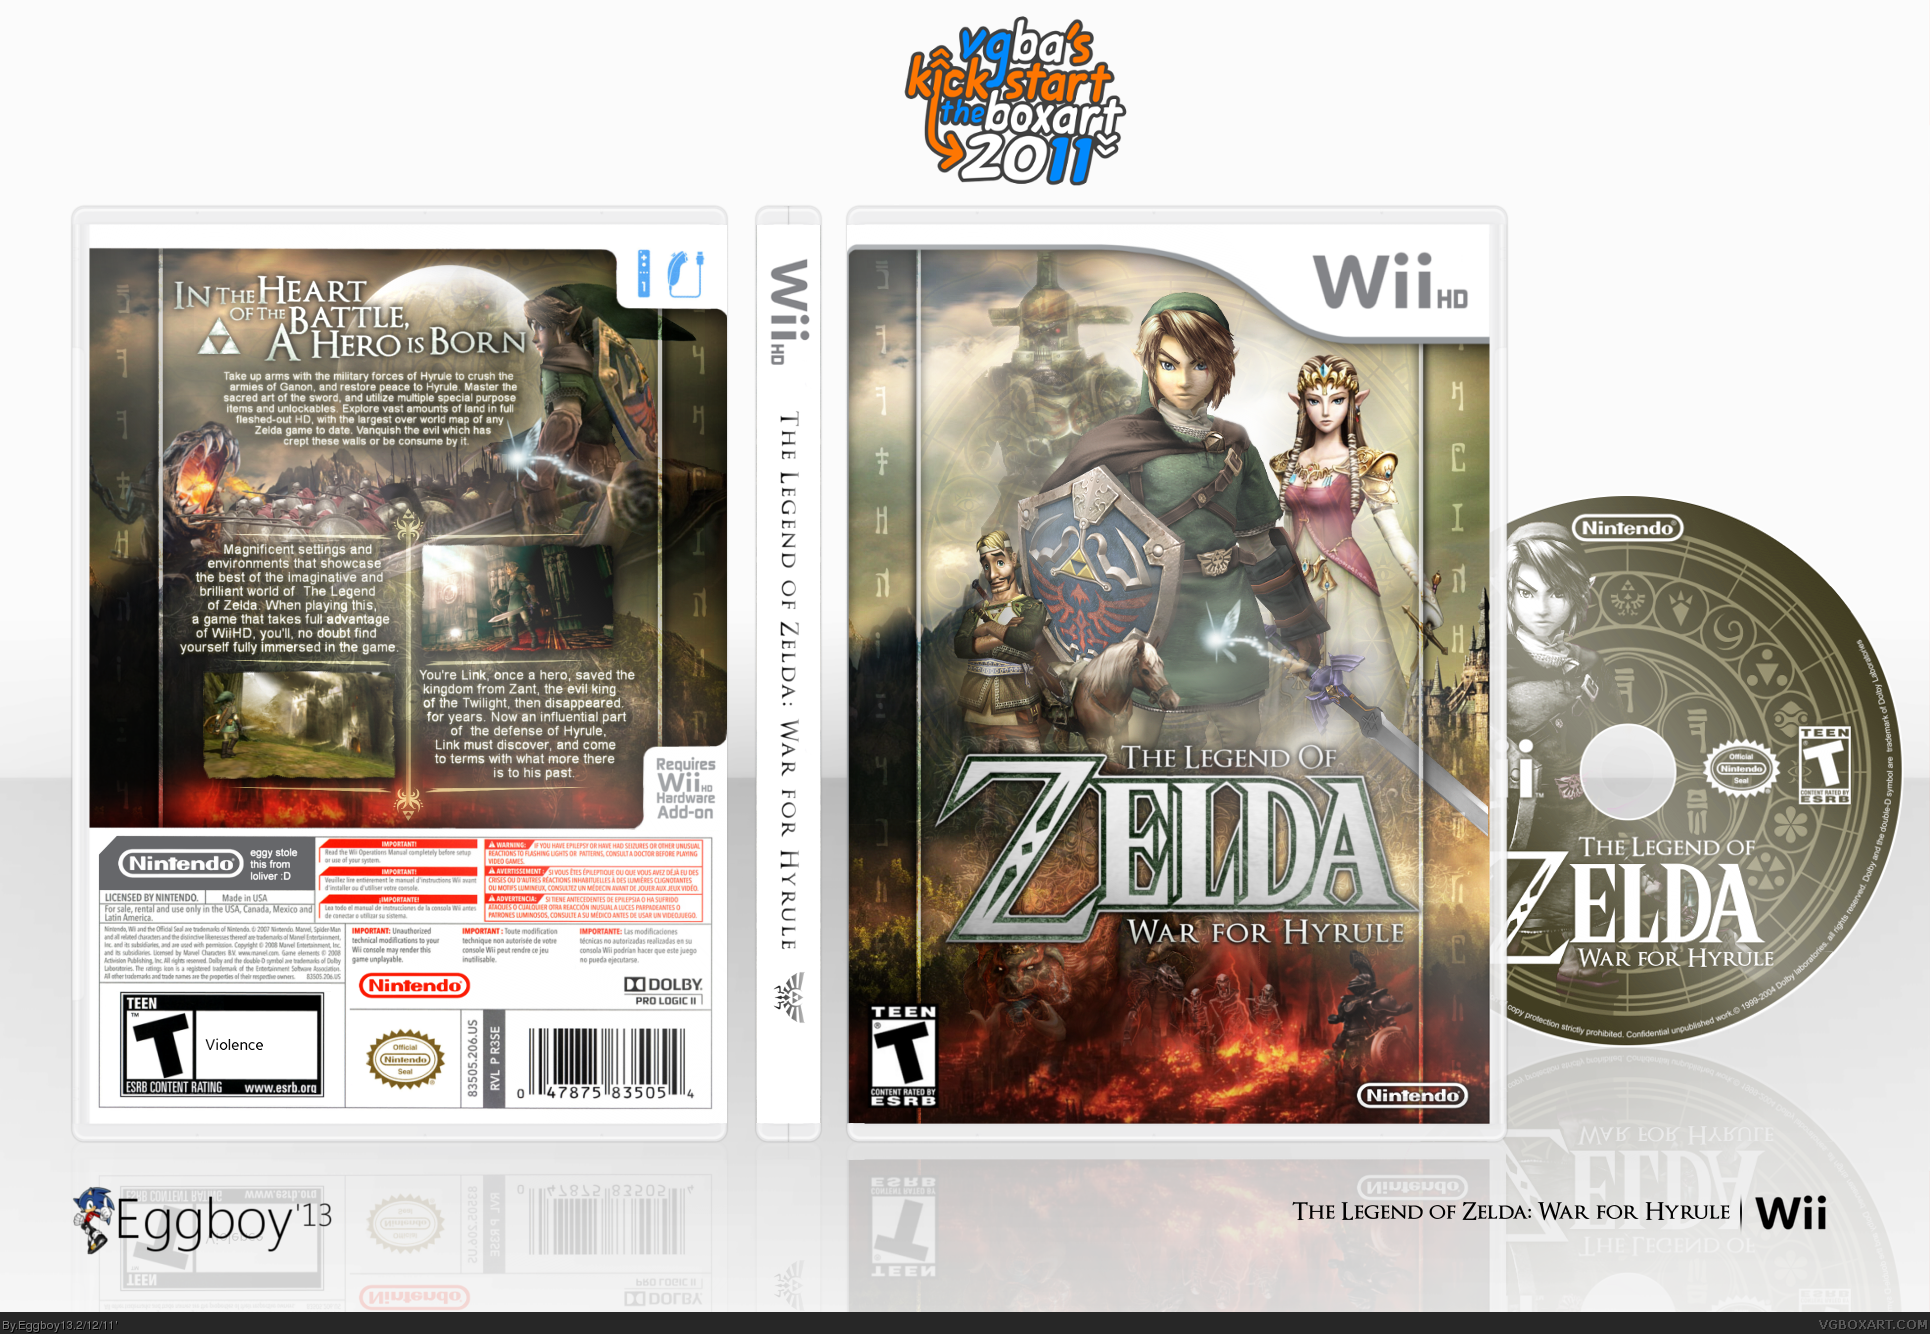 The Legend of Zelda: War for Hyrule box cover